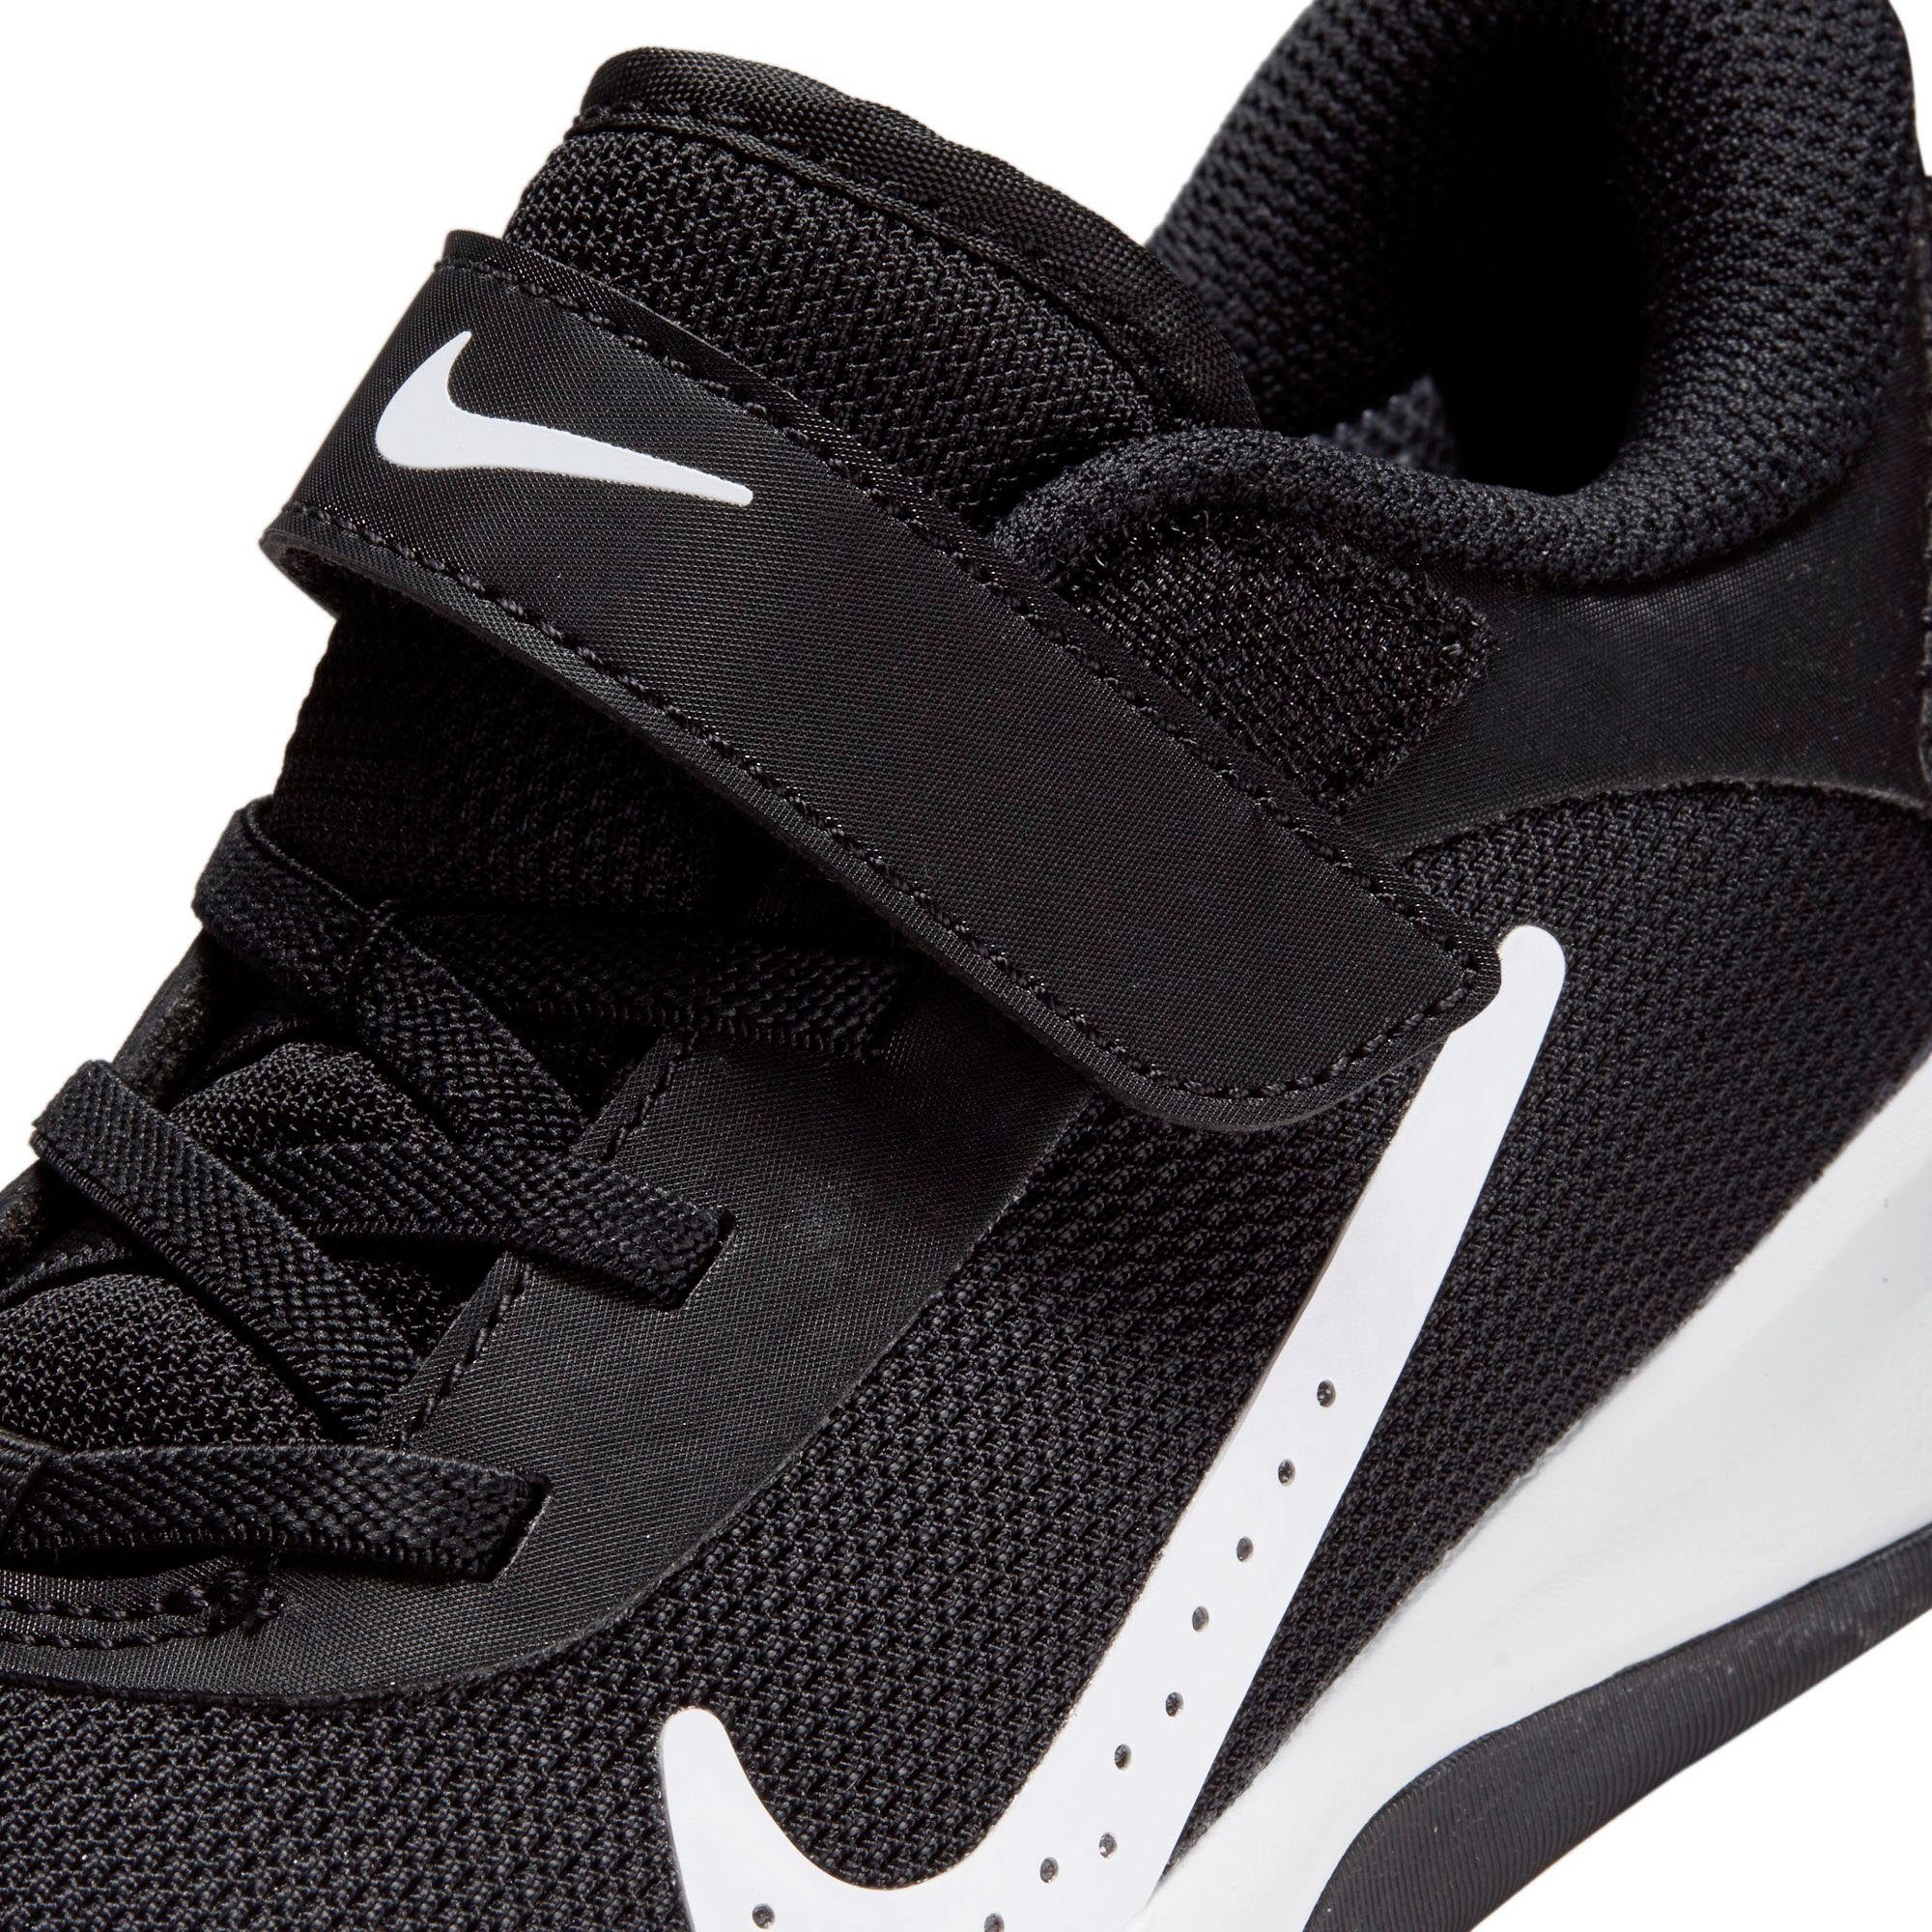 black-white Nike Multi-Court Hallenschuh Omni (PS)